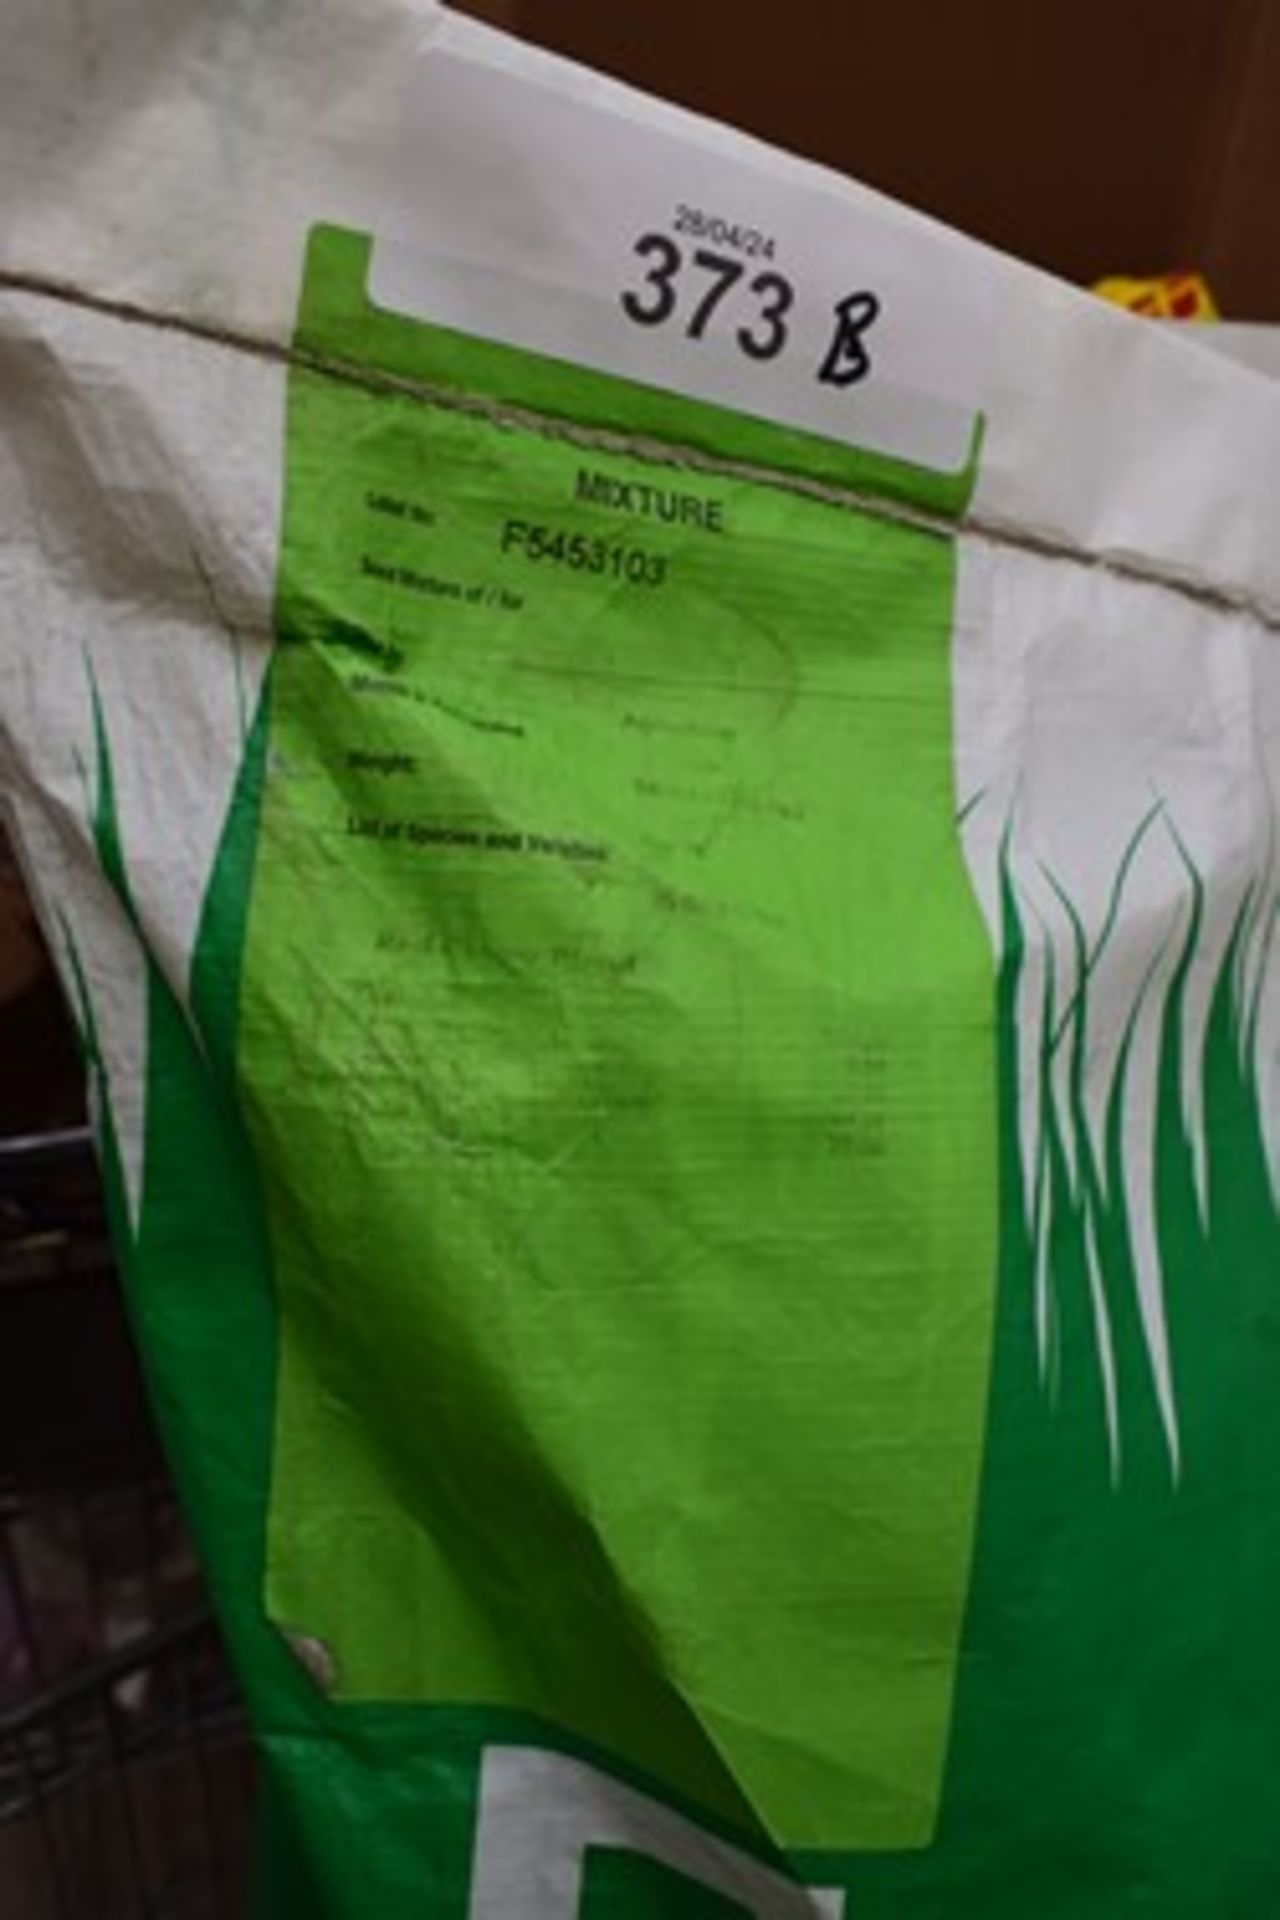 1 x 25kg sack of Forage agricultural seed mix and 2 x bag of Qualitats- Saatgut Leo seed (slight